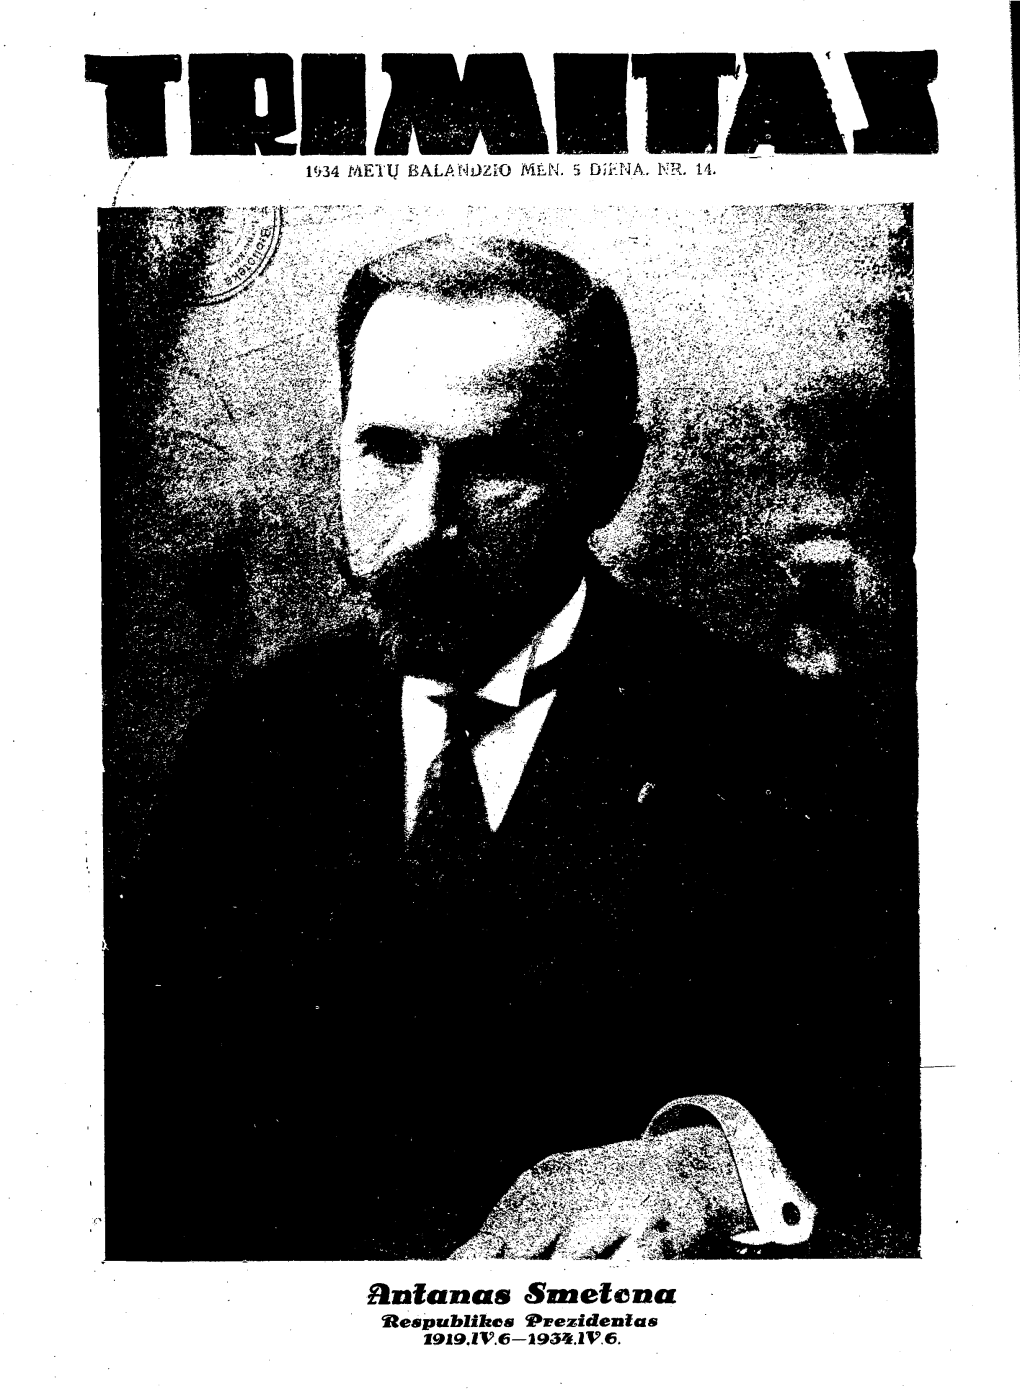 Antanas Smetona Respublikos Prezidentas 1919.IV.6 - 1934.IV.6